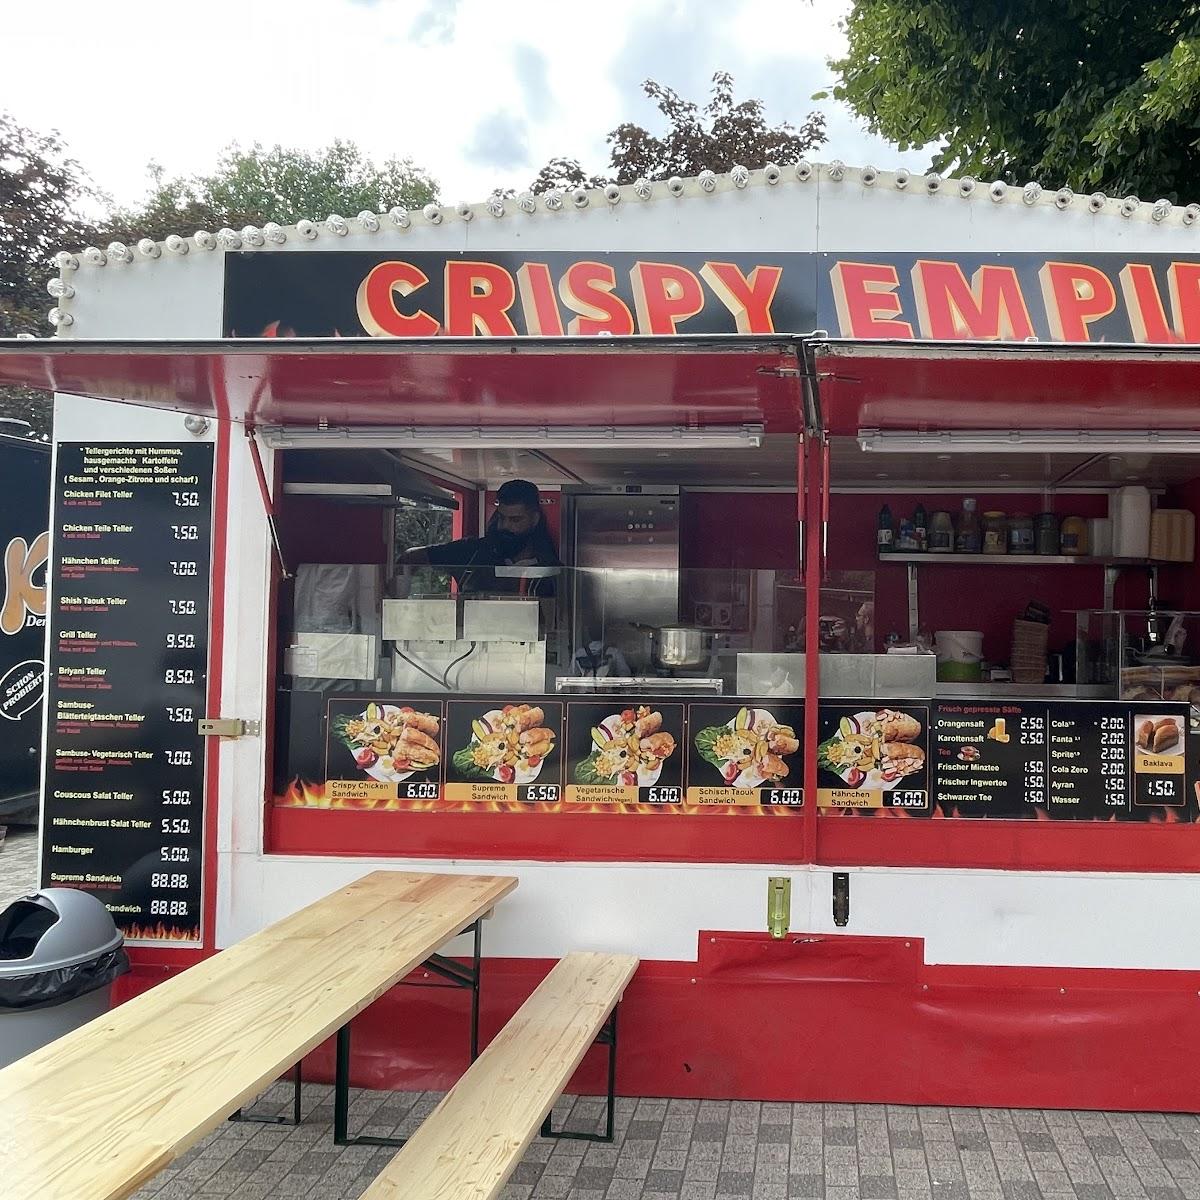 Restaurant "Crispy Empire" in Berlin